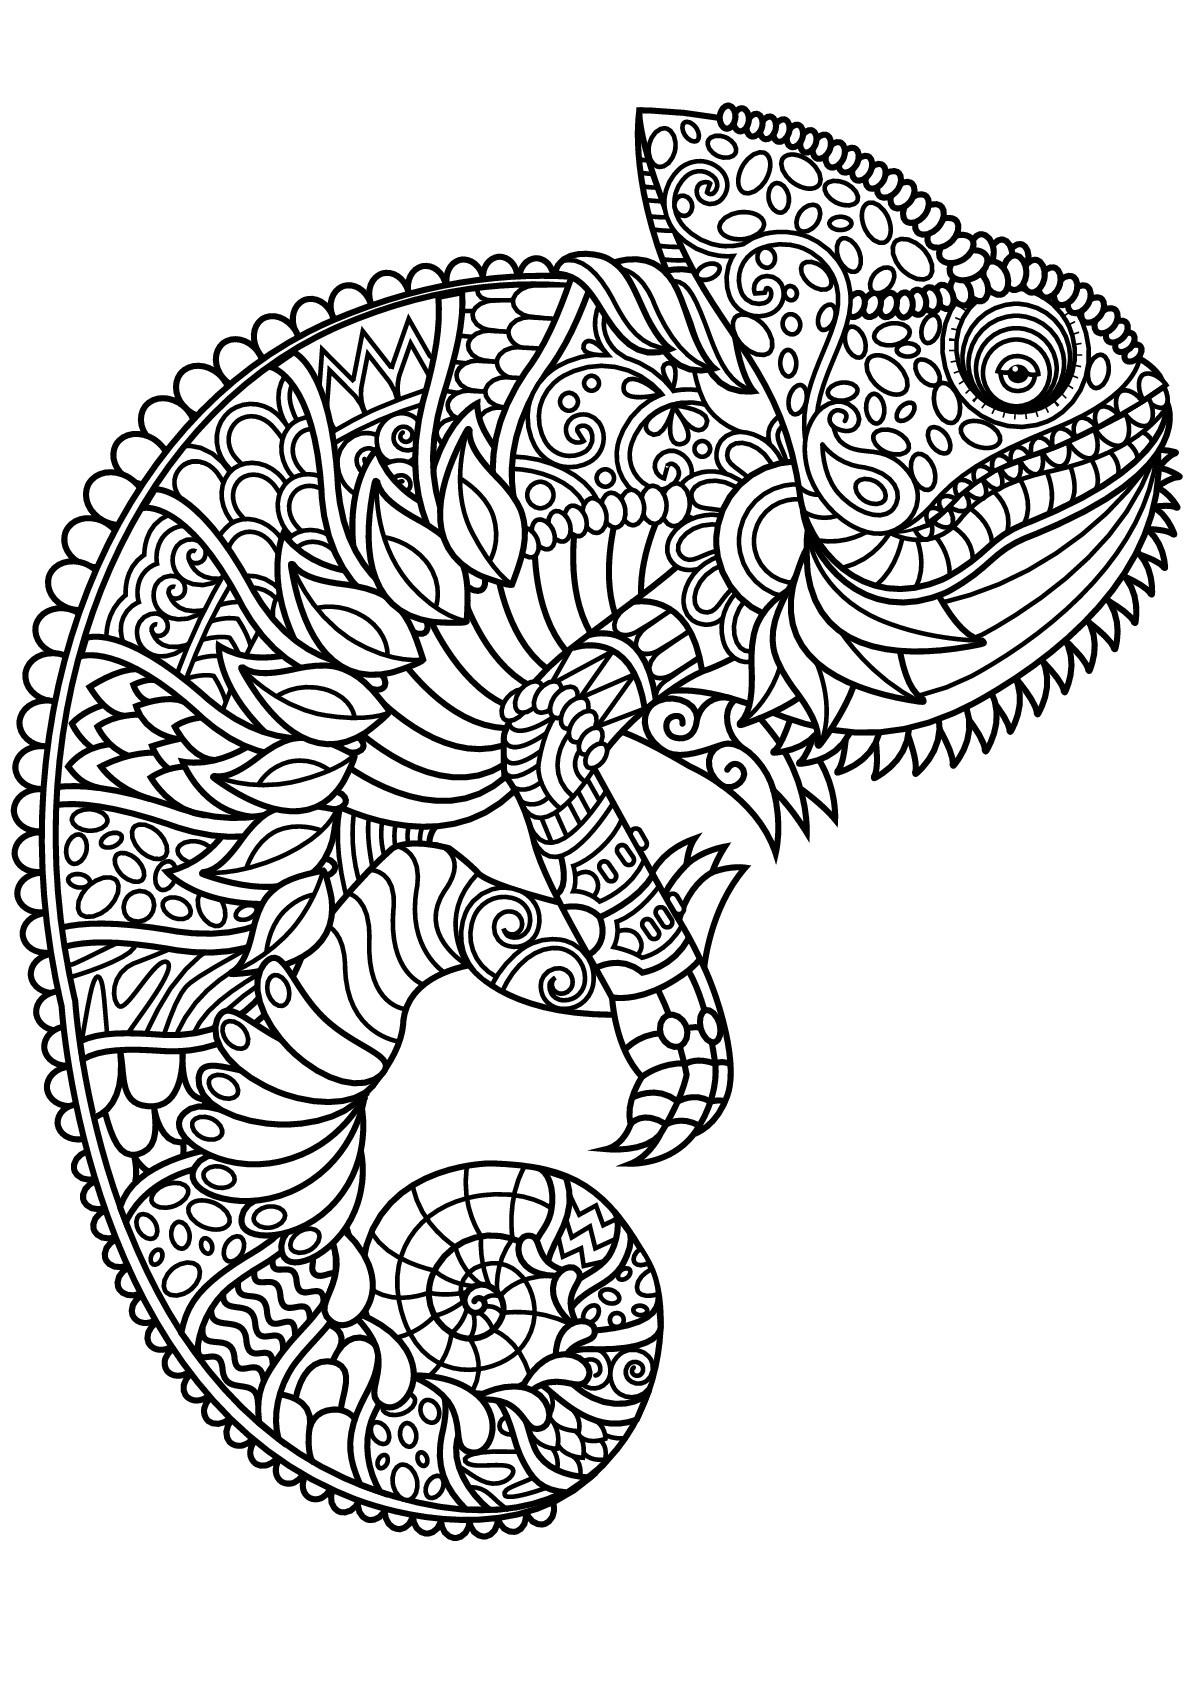 Cameleon Coloring Pages
 Free book chameleon Chameleons & lizards Adult Coloring